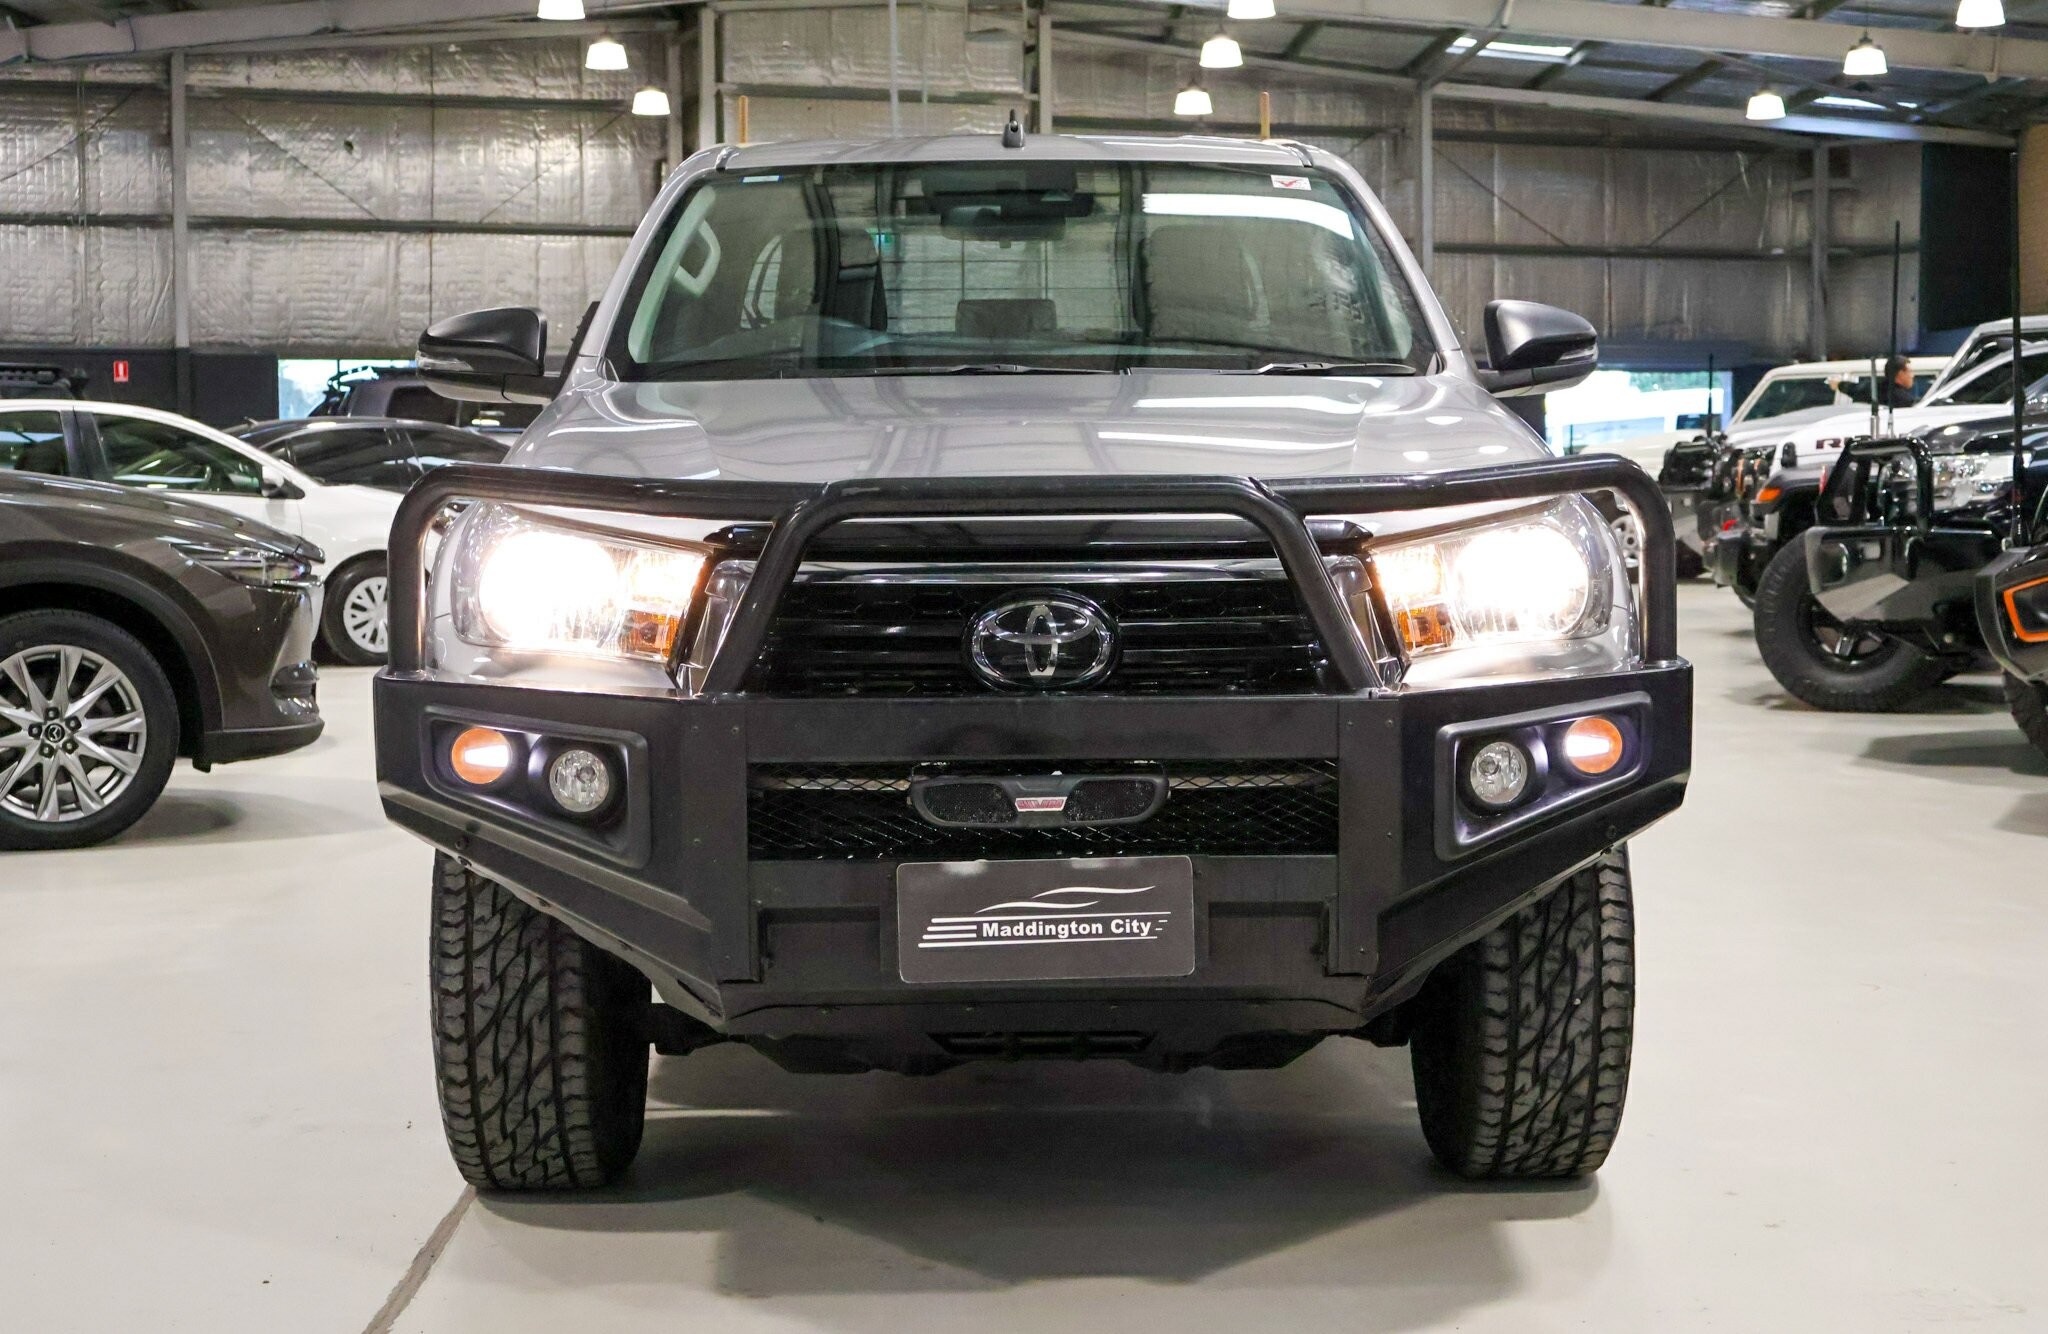 Toyota Hilux image 2